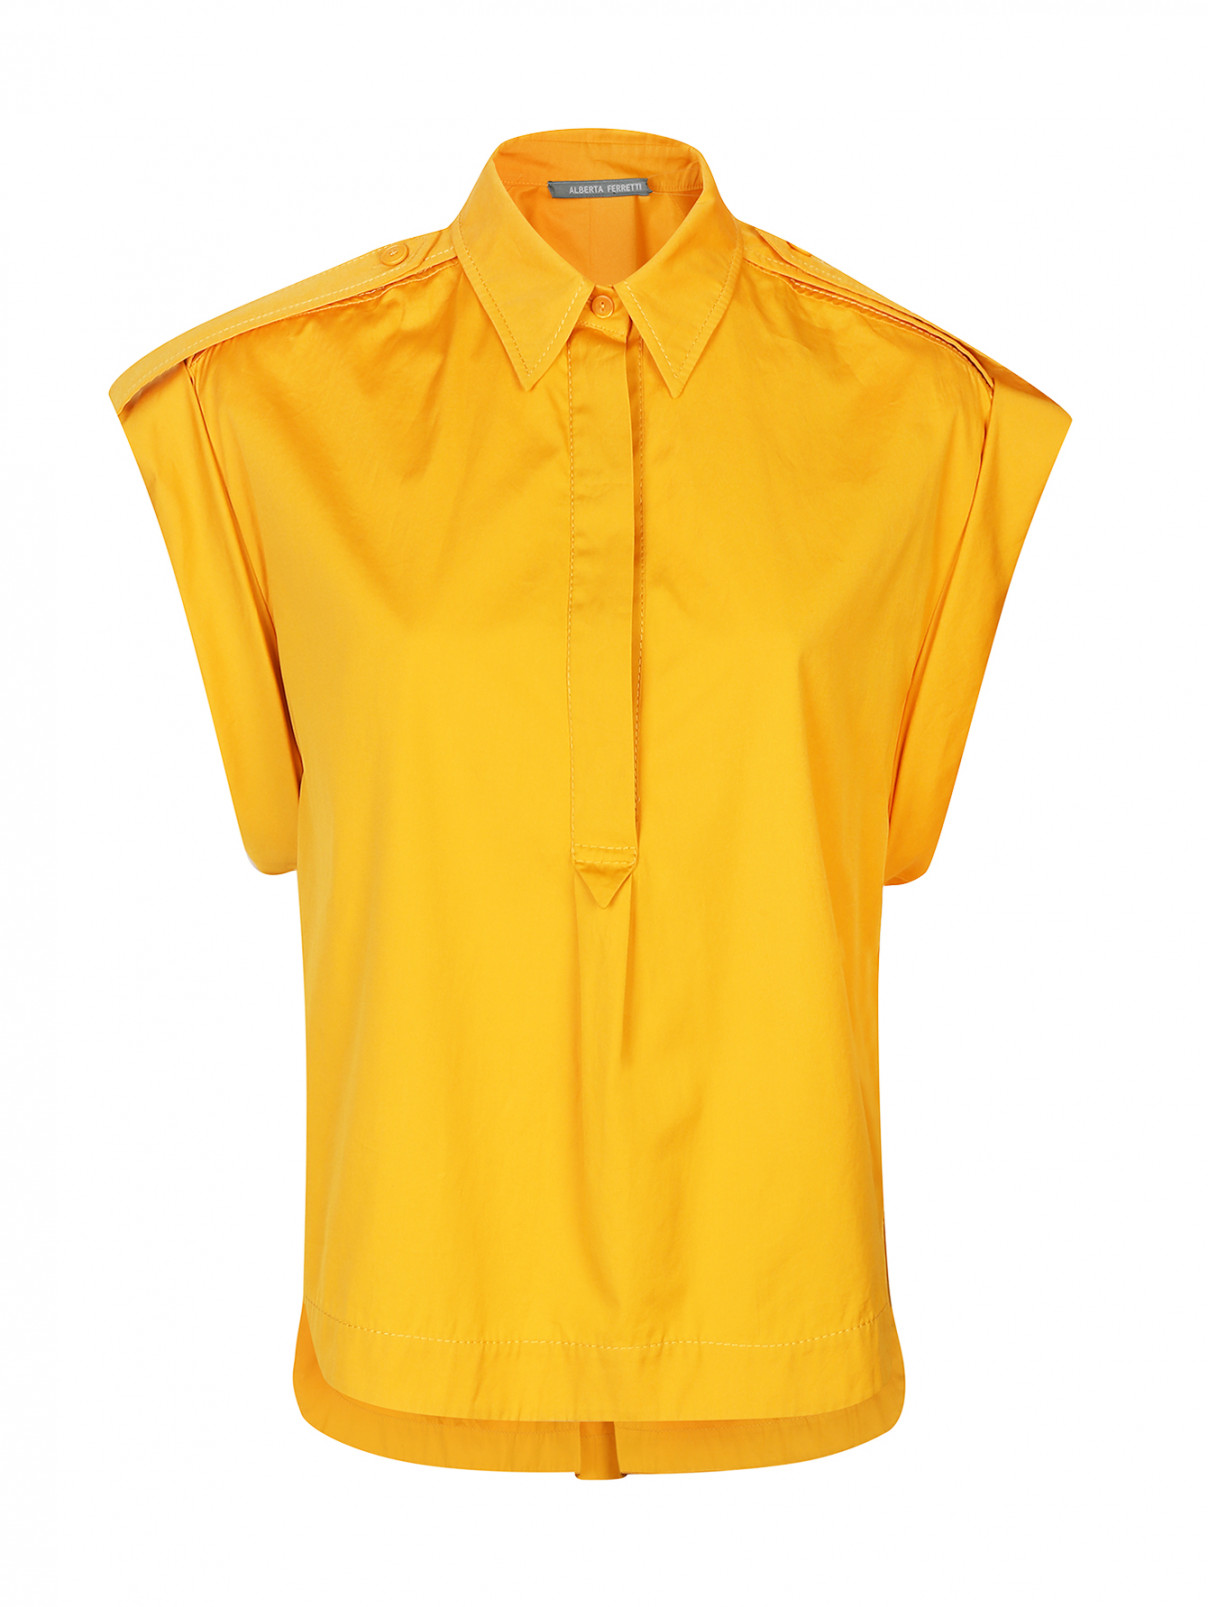 Блуза из хлопка с короткими рукавами Alberta Ferretti  –  Общий вид  – Цвет:  Желтый